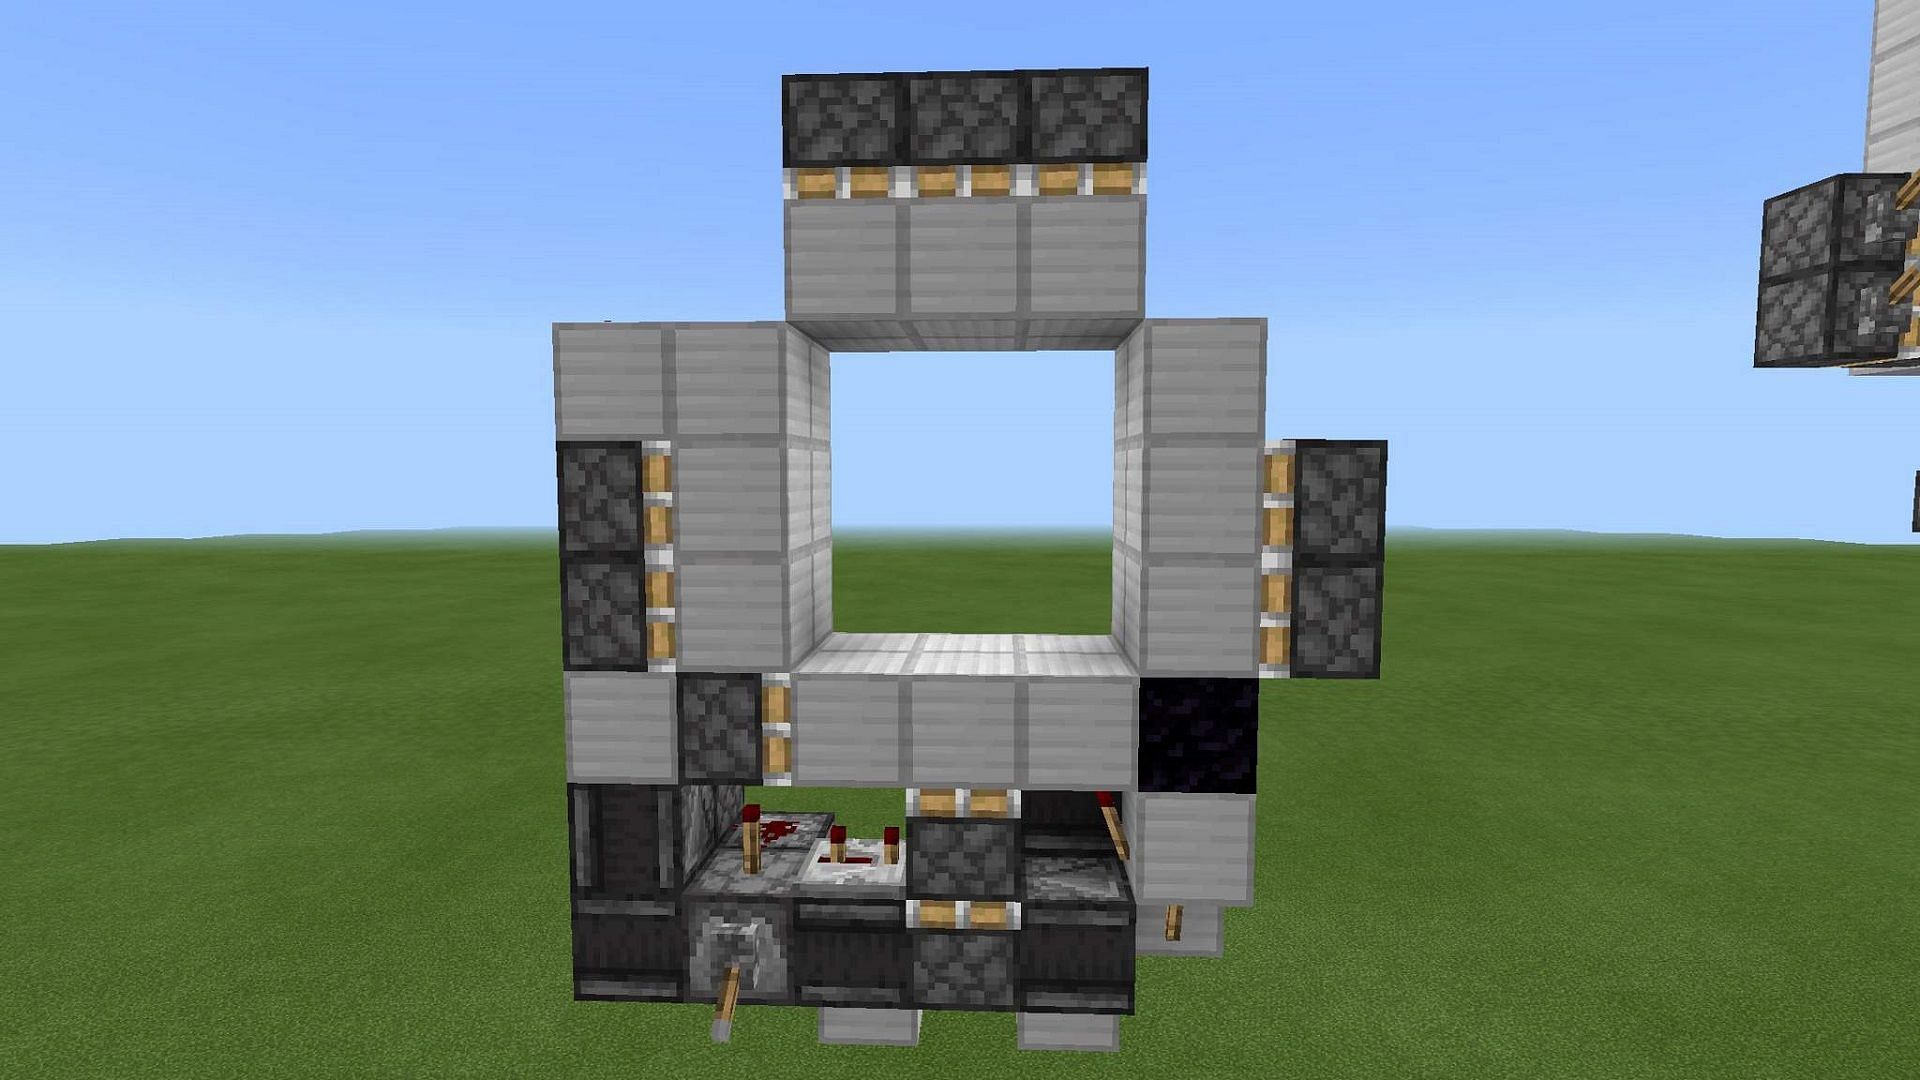 A 3x3 piston door in Minecraft (Image via DatOneGuy/Minecraft Amino)